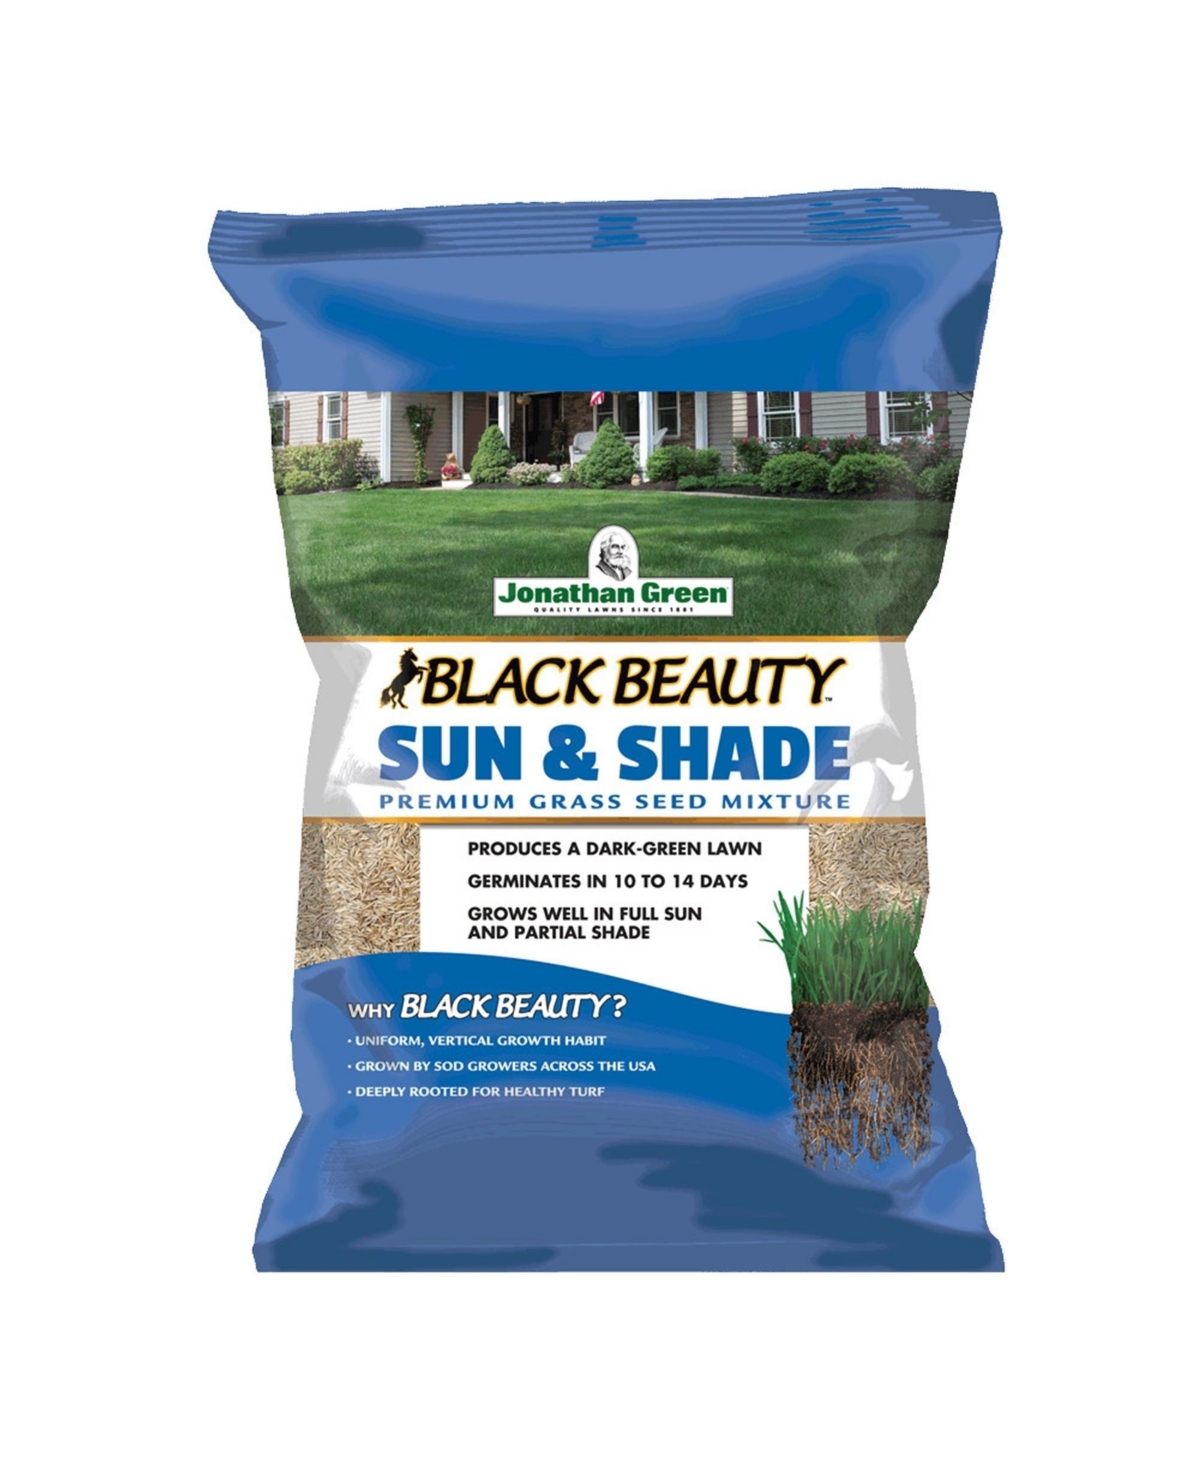 (#12005) Black Beauty Sun & Shade Grass Seed, 7lb bag - Brown